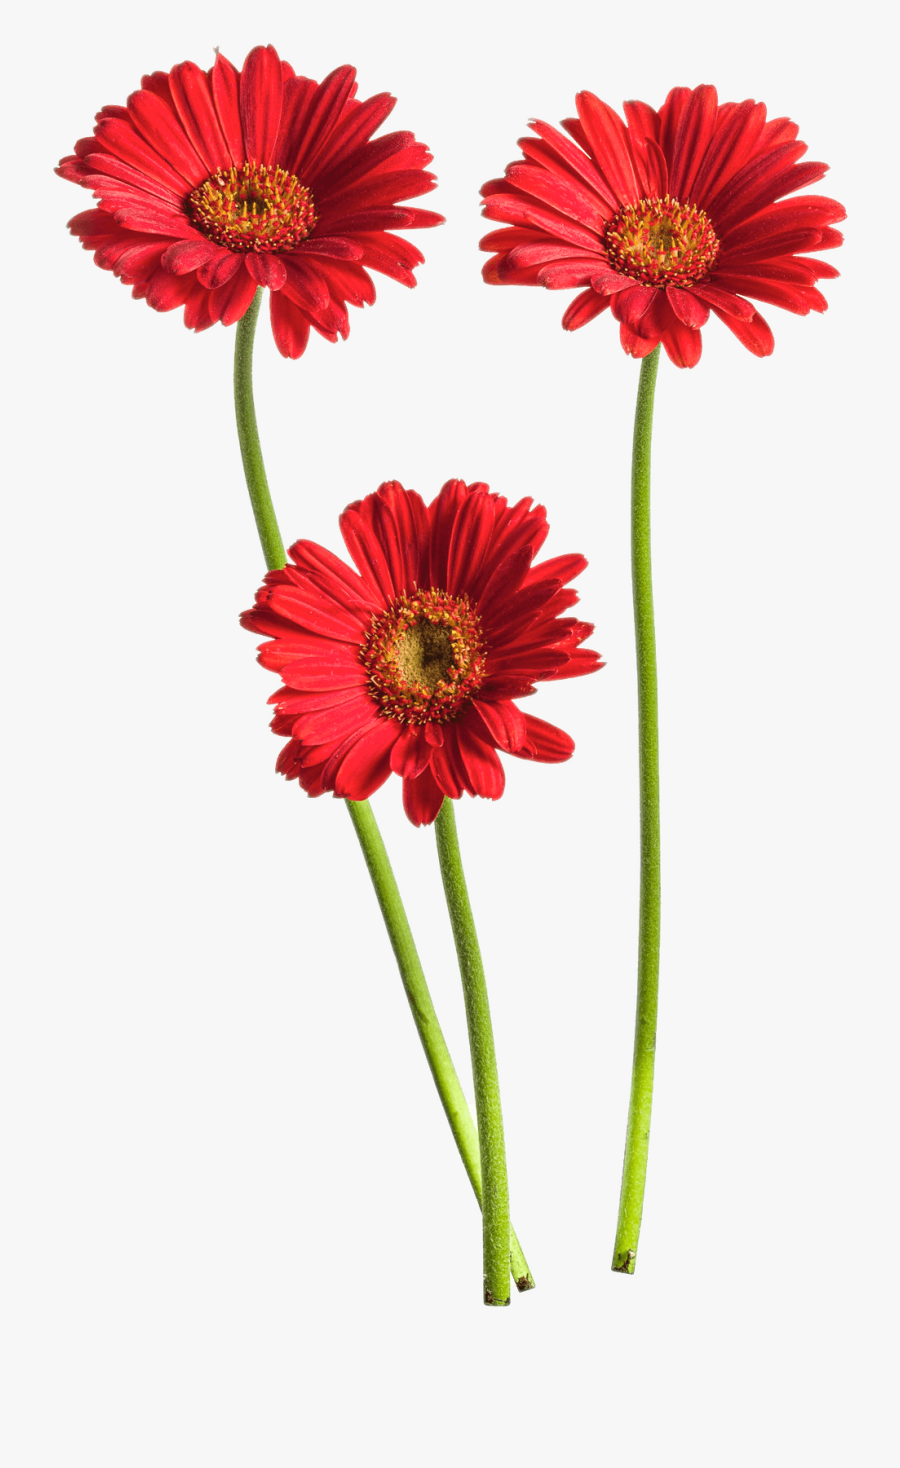 Gerbera Flower Png High-quality Image - Gerbera Flower Png, Transparent Clipart